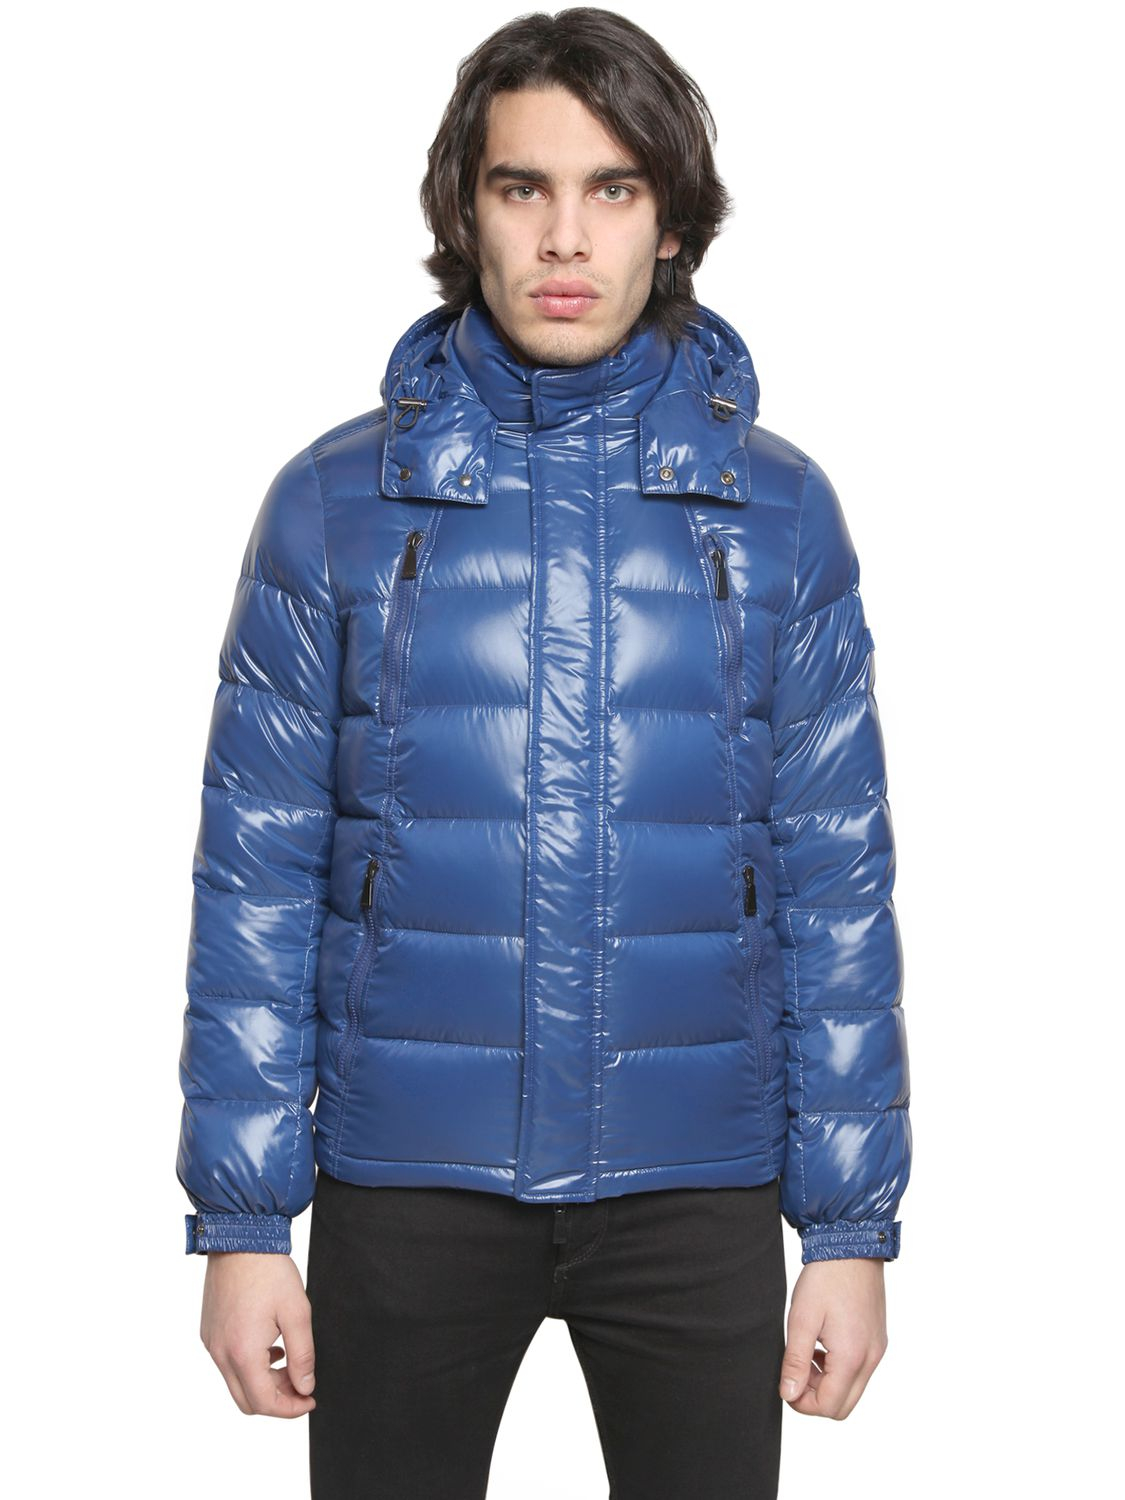 Lyst - Tatras Sargas Shiny Nylon Hooded Down Jacket in Blue for Men